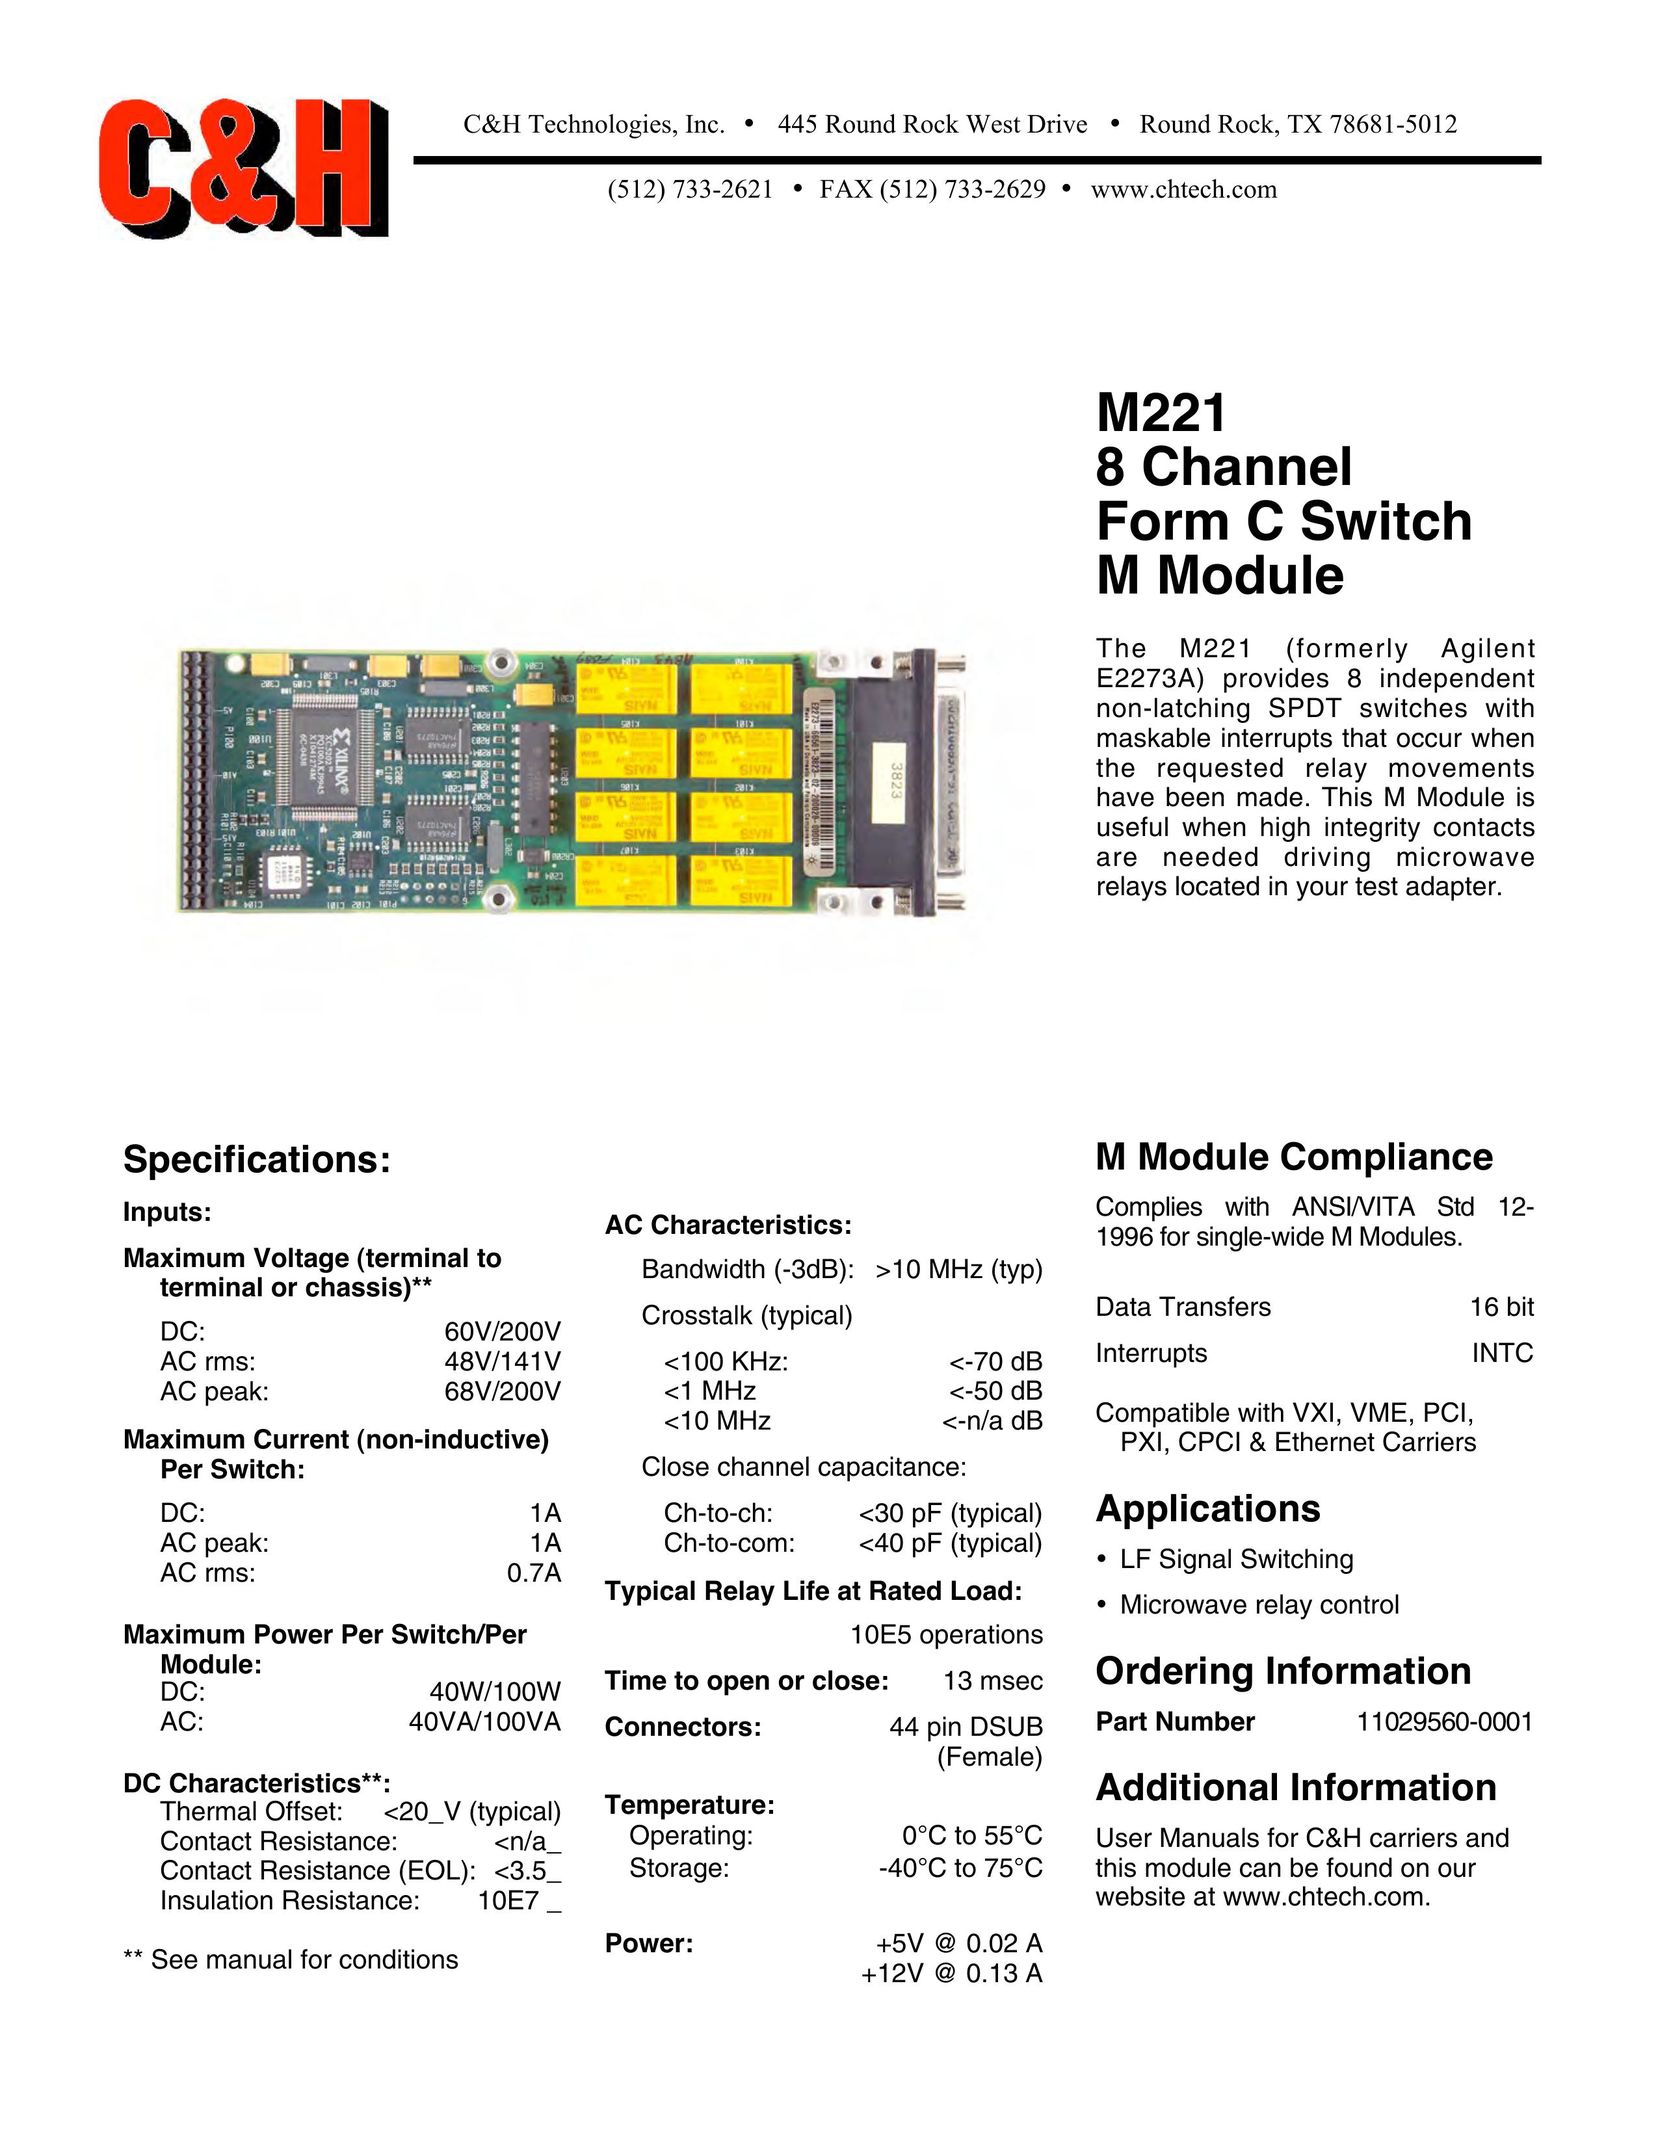 CH Tech M221 Switch User Manual